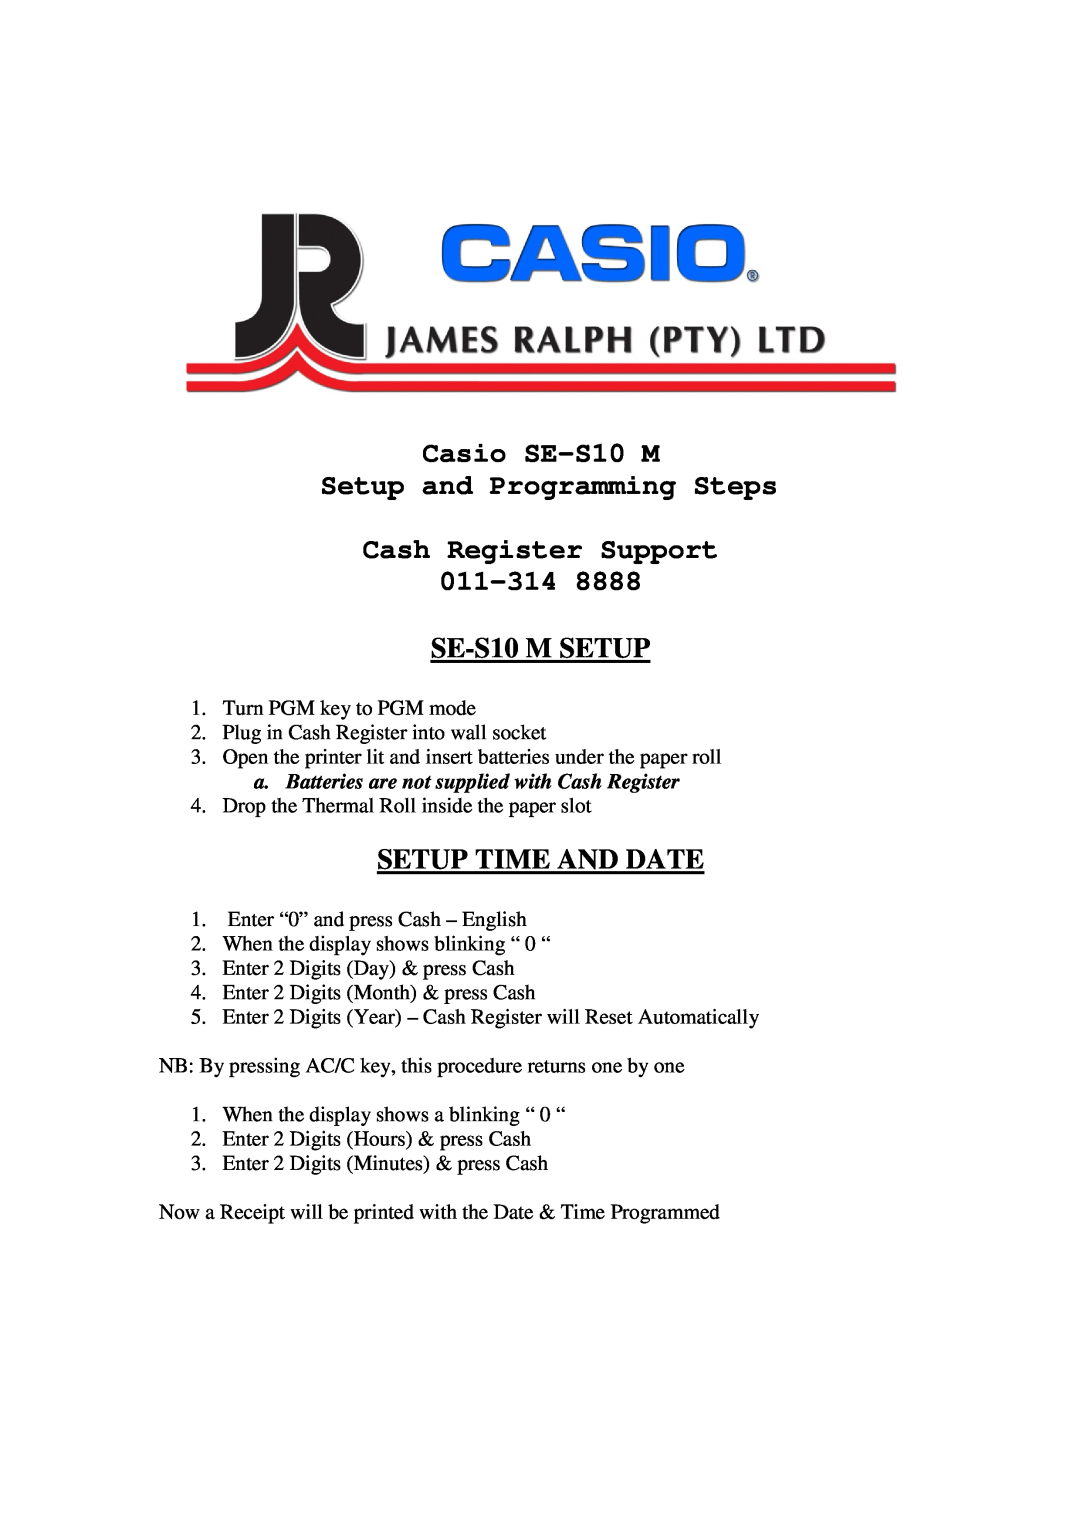 Casio manual SE-S10 M SETUP, Setup Time And Date, Casio SE-S10 M Setup and Programming Steps Cash Register Support 